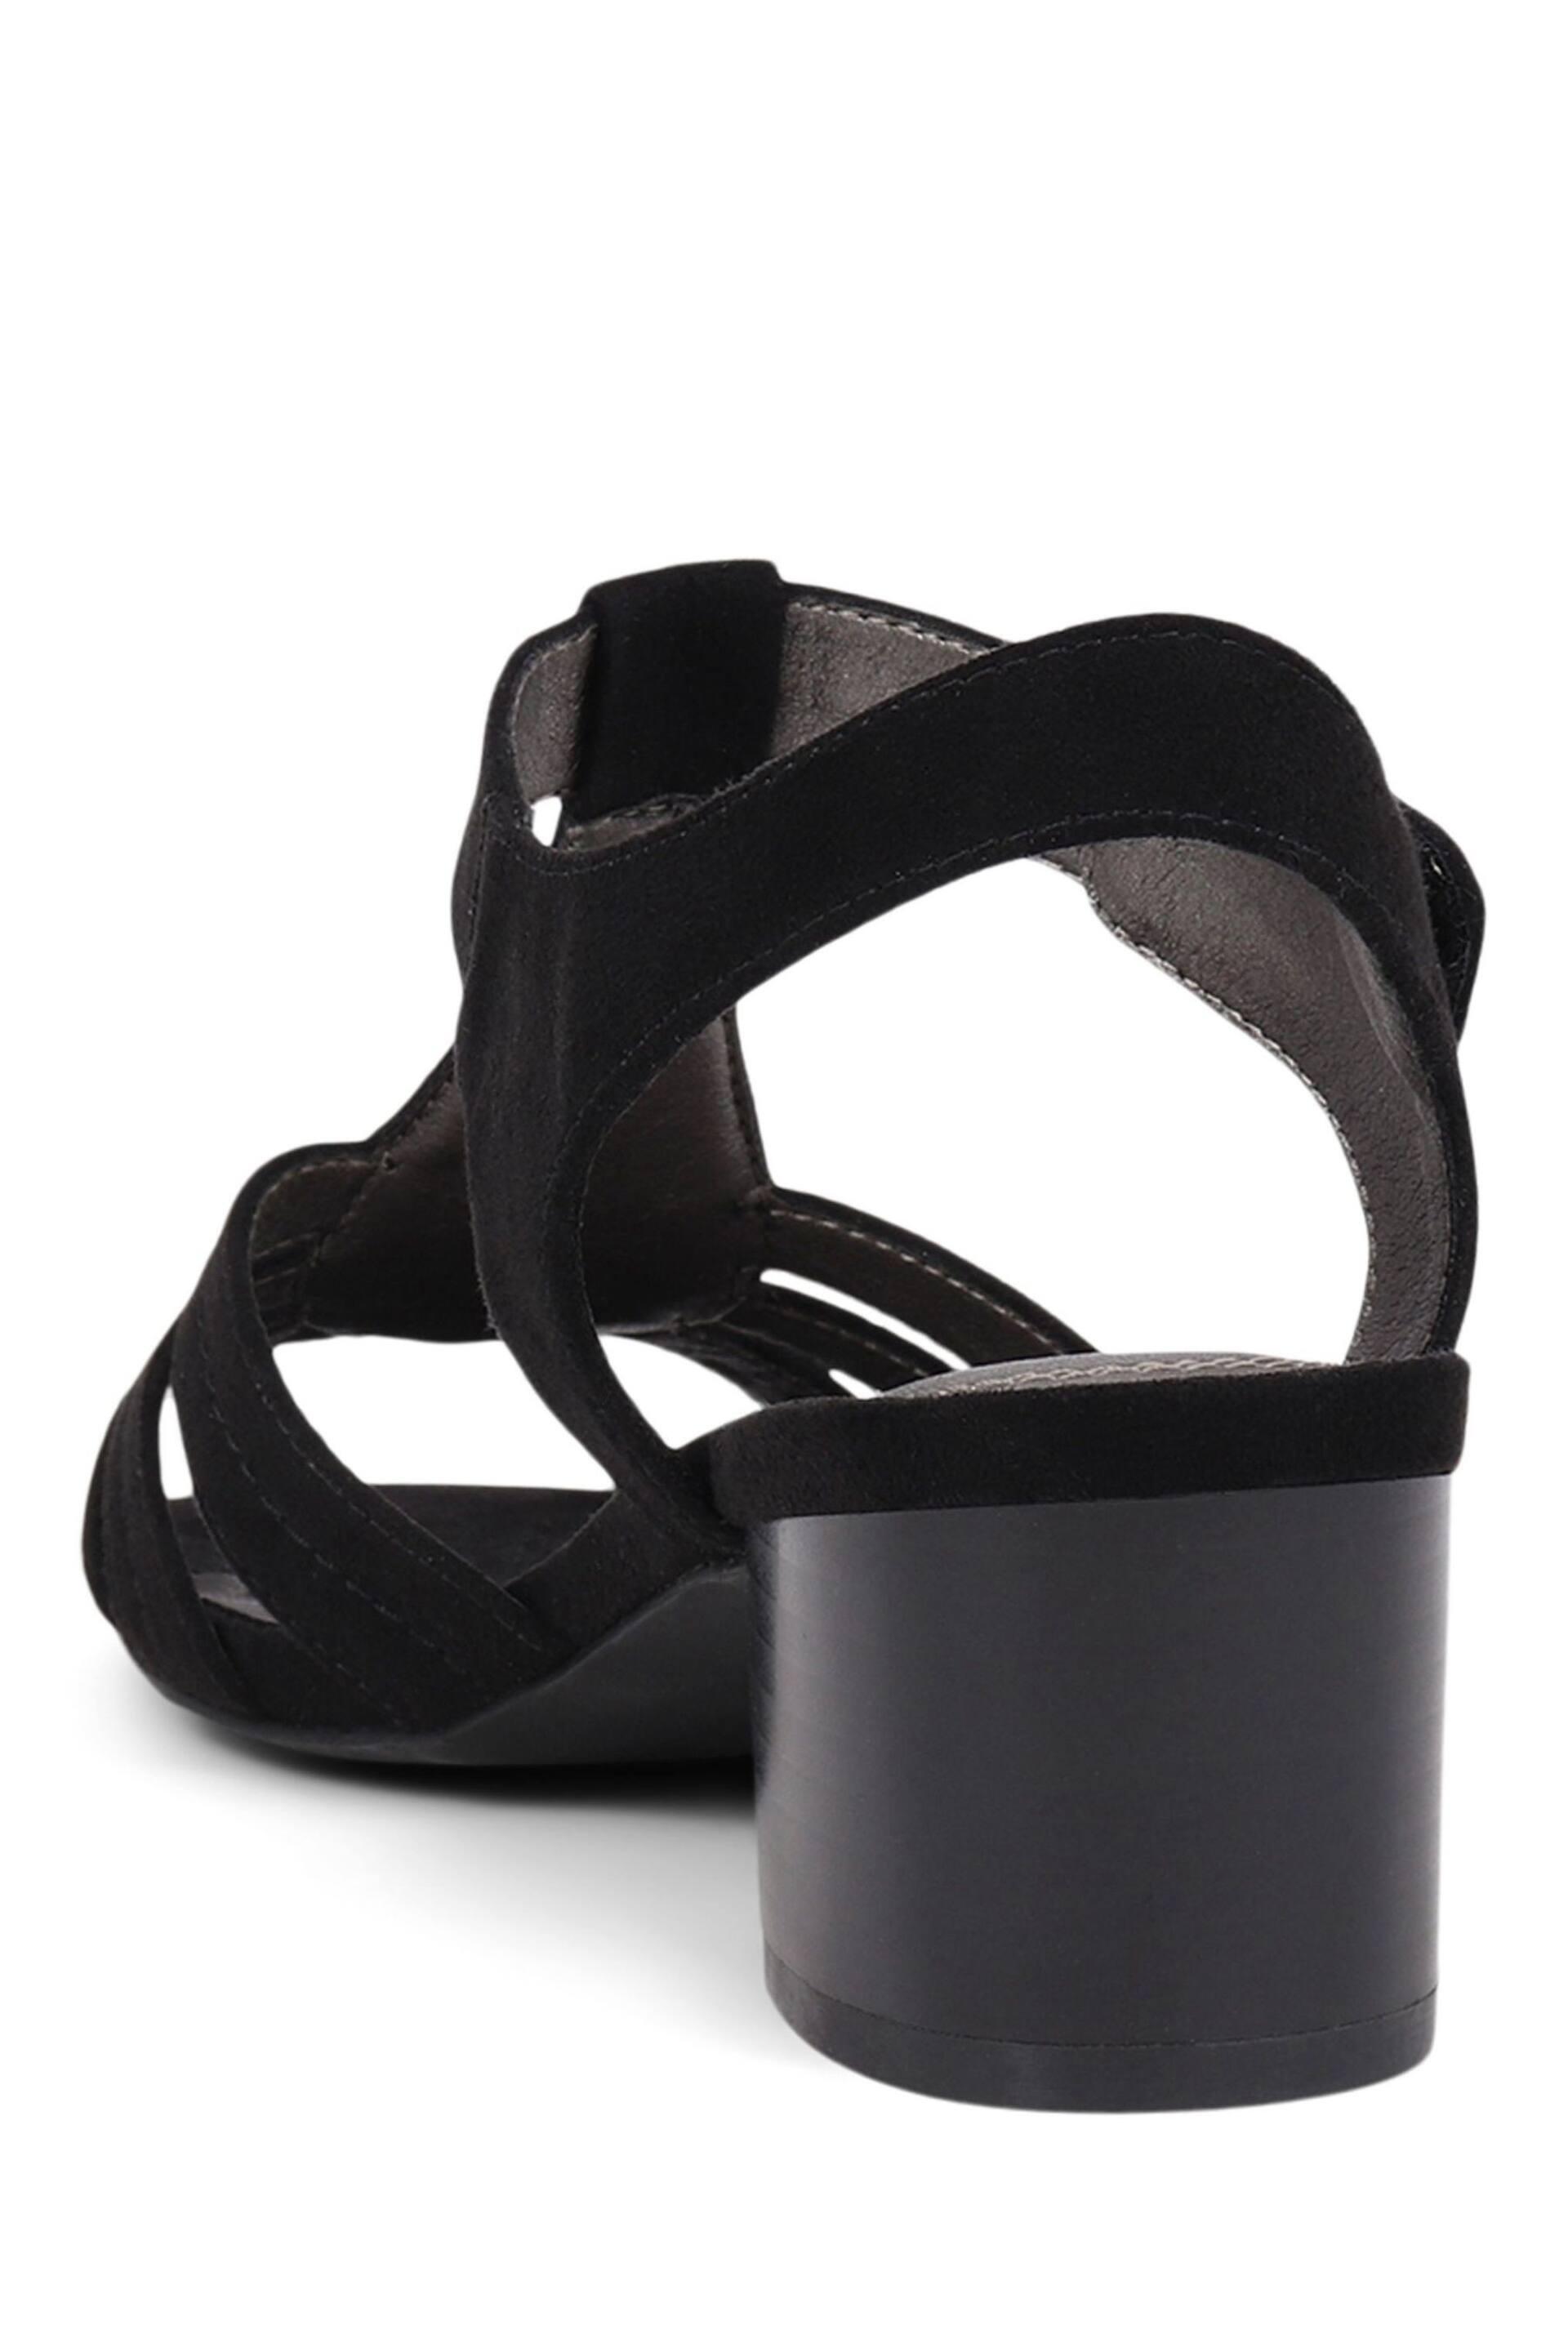 Pavers Heeled Smart Black Sandals - Image 3 of 5